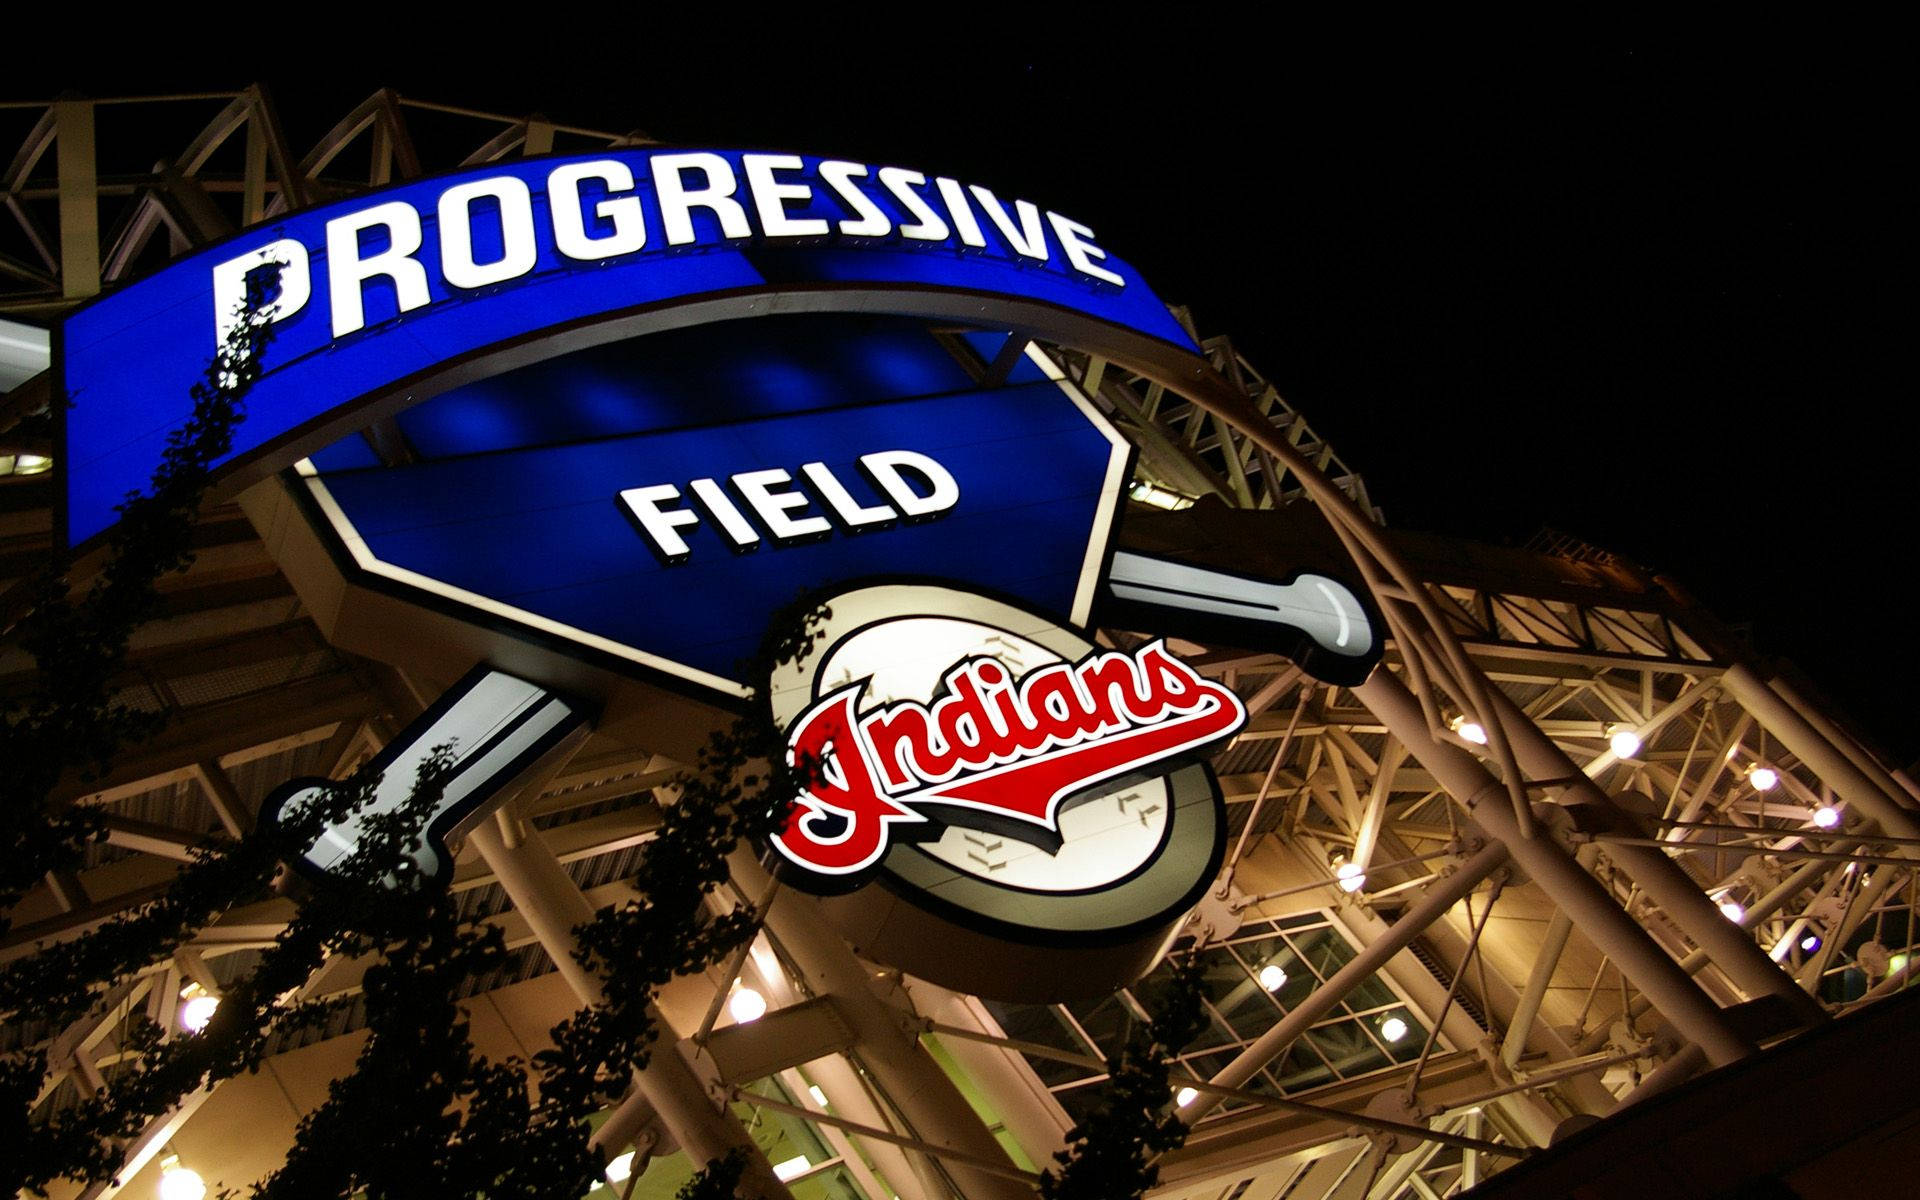 Cleveland Indians Progressive Field Entrance Wallpaper